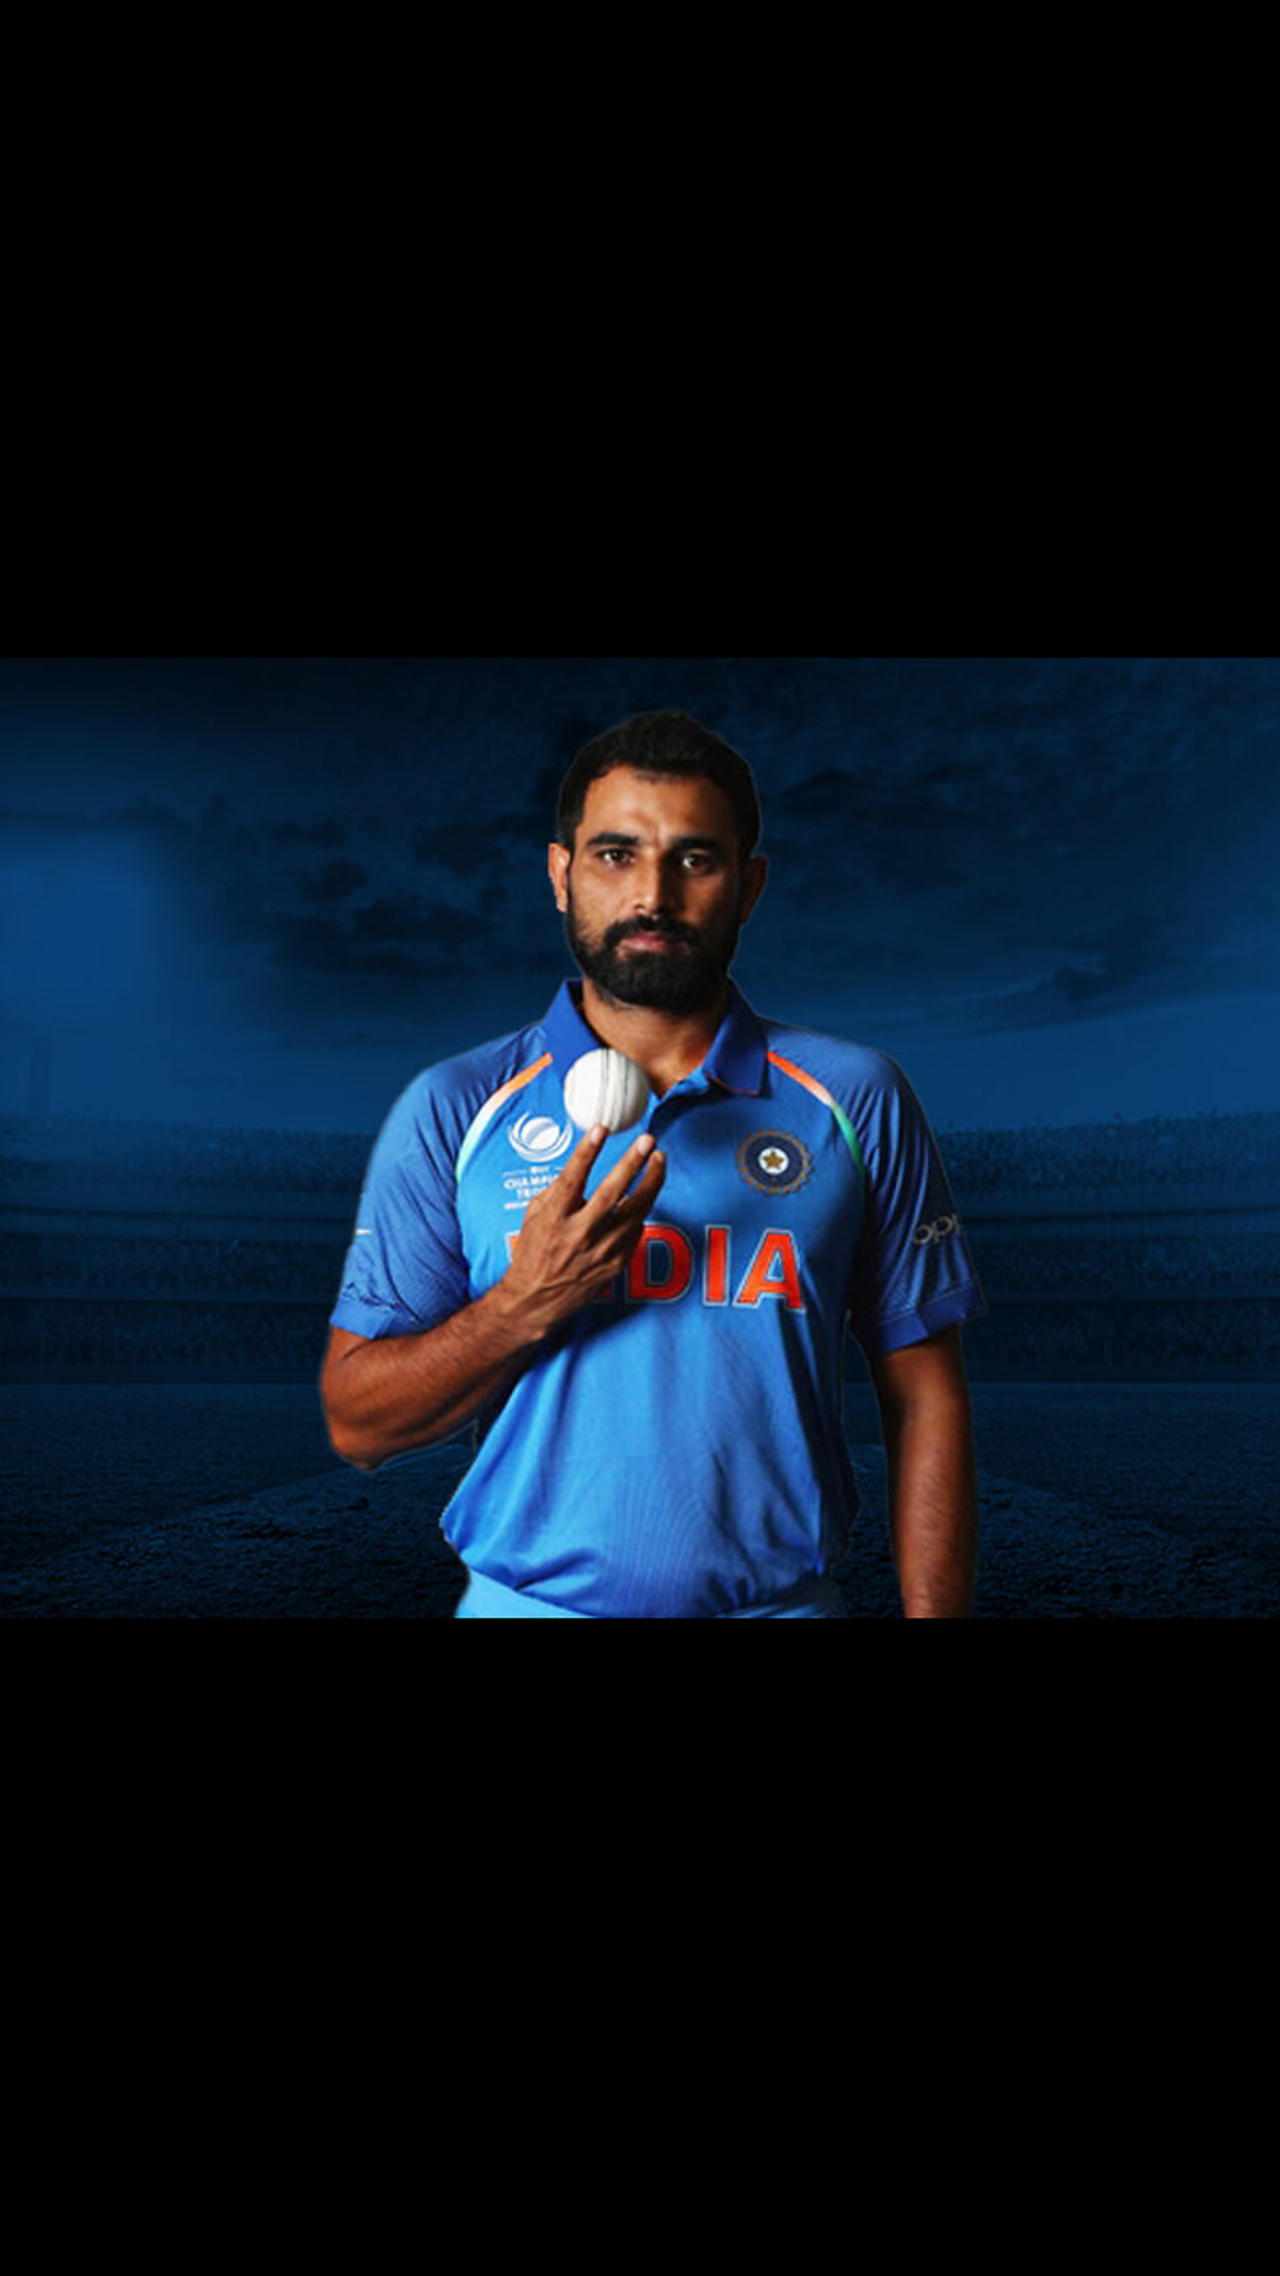 Md Shami - India's Bowling Maestro ! #ipl #cricket